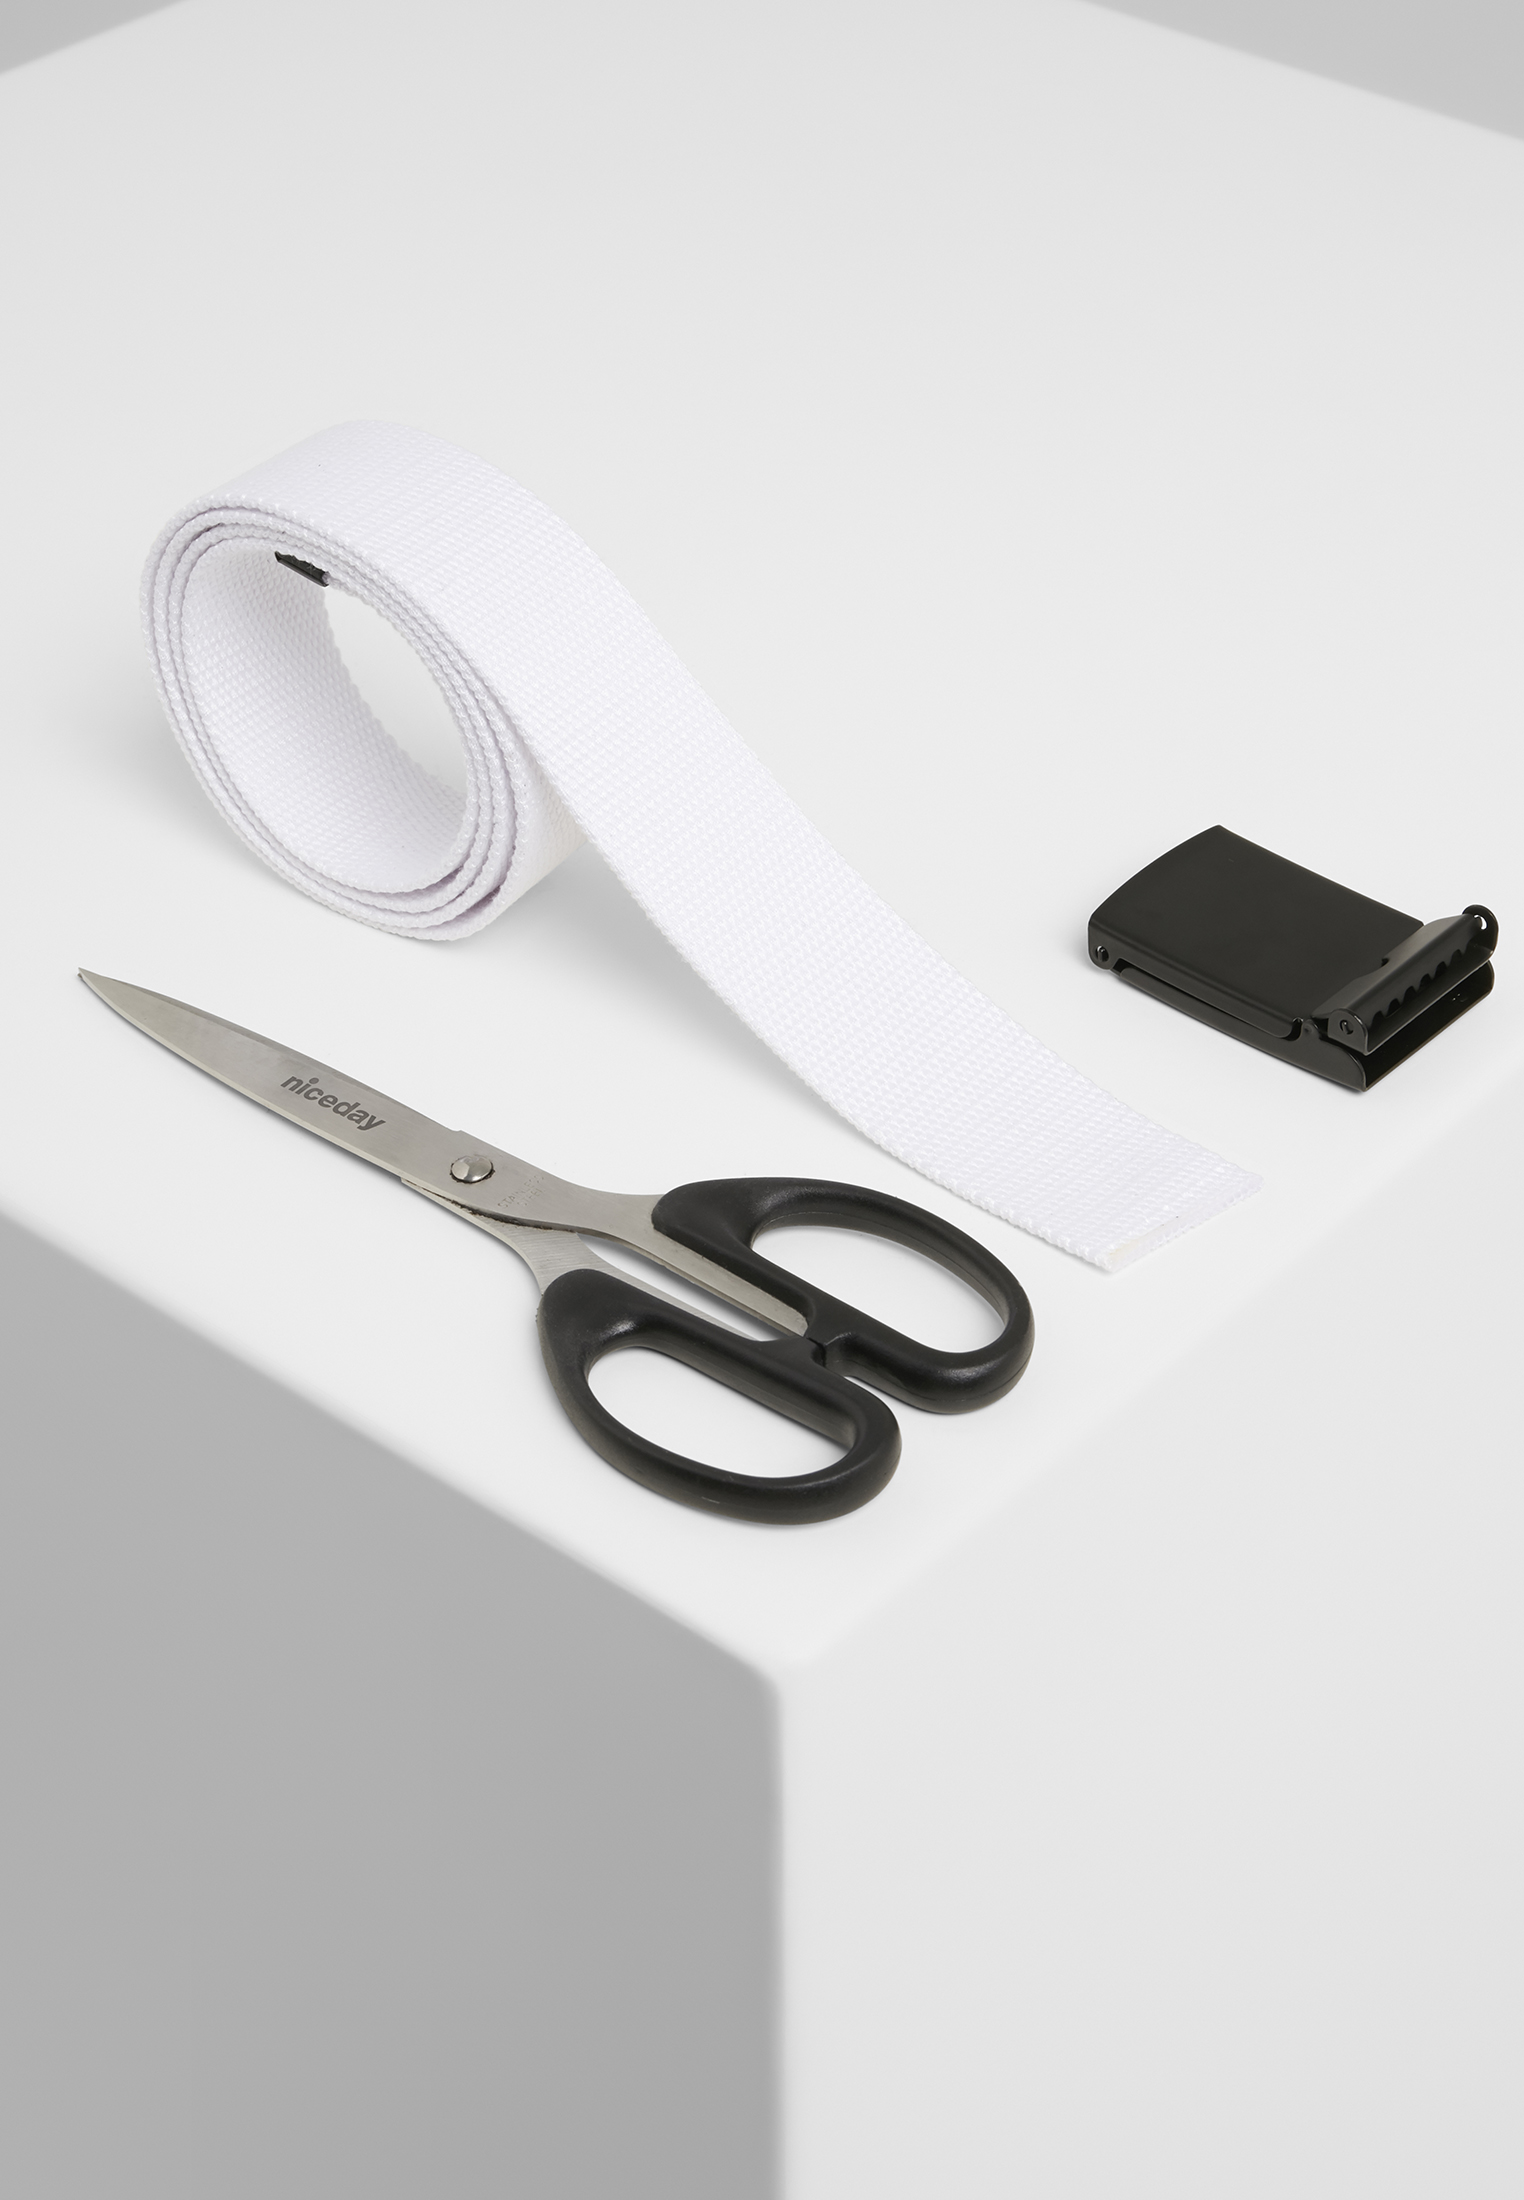 G?rtel Canvas Belts in Farbe white/black